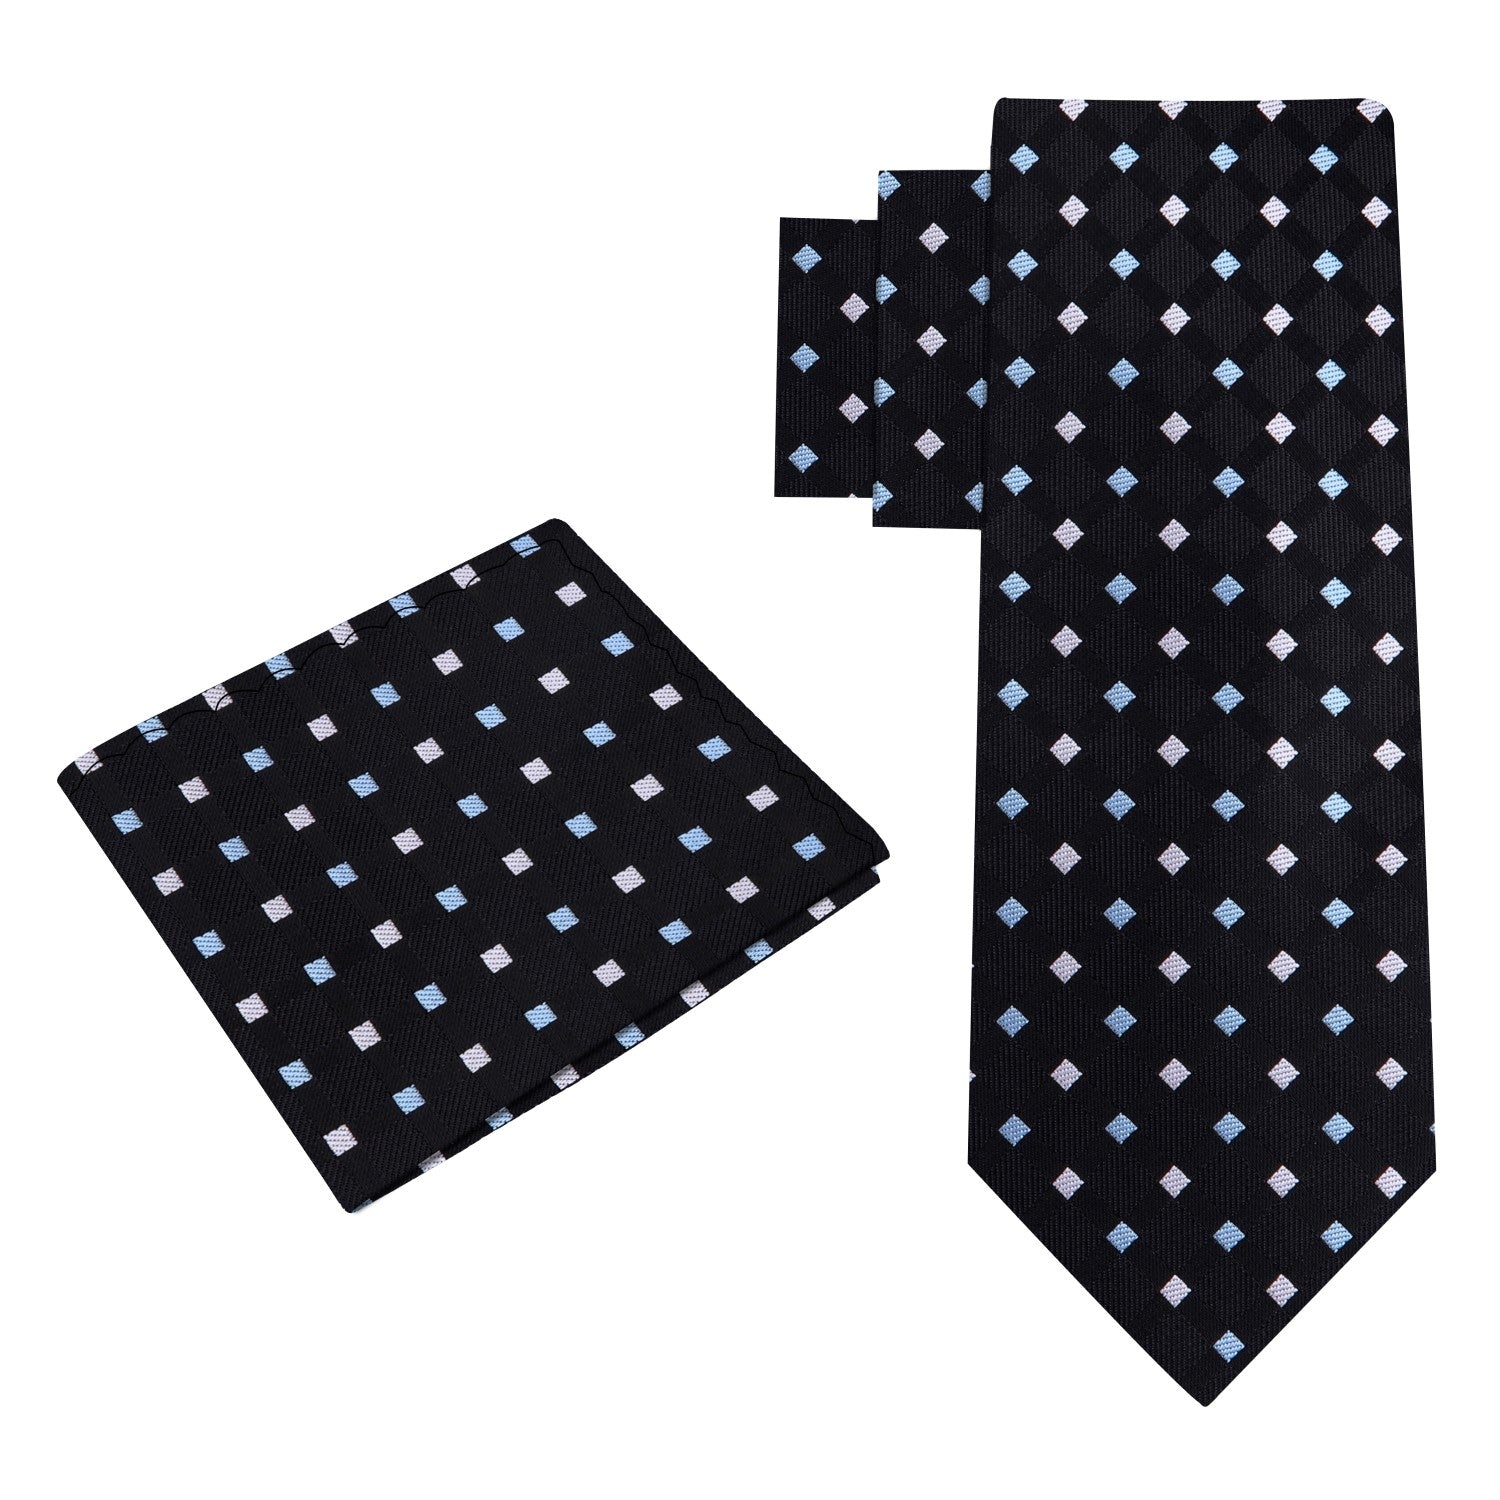 View 2: A Black, Light Blue, Light Grey Color Geometric Diamond Pattern Silk Tie, Pocket Square